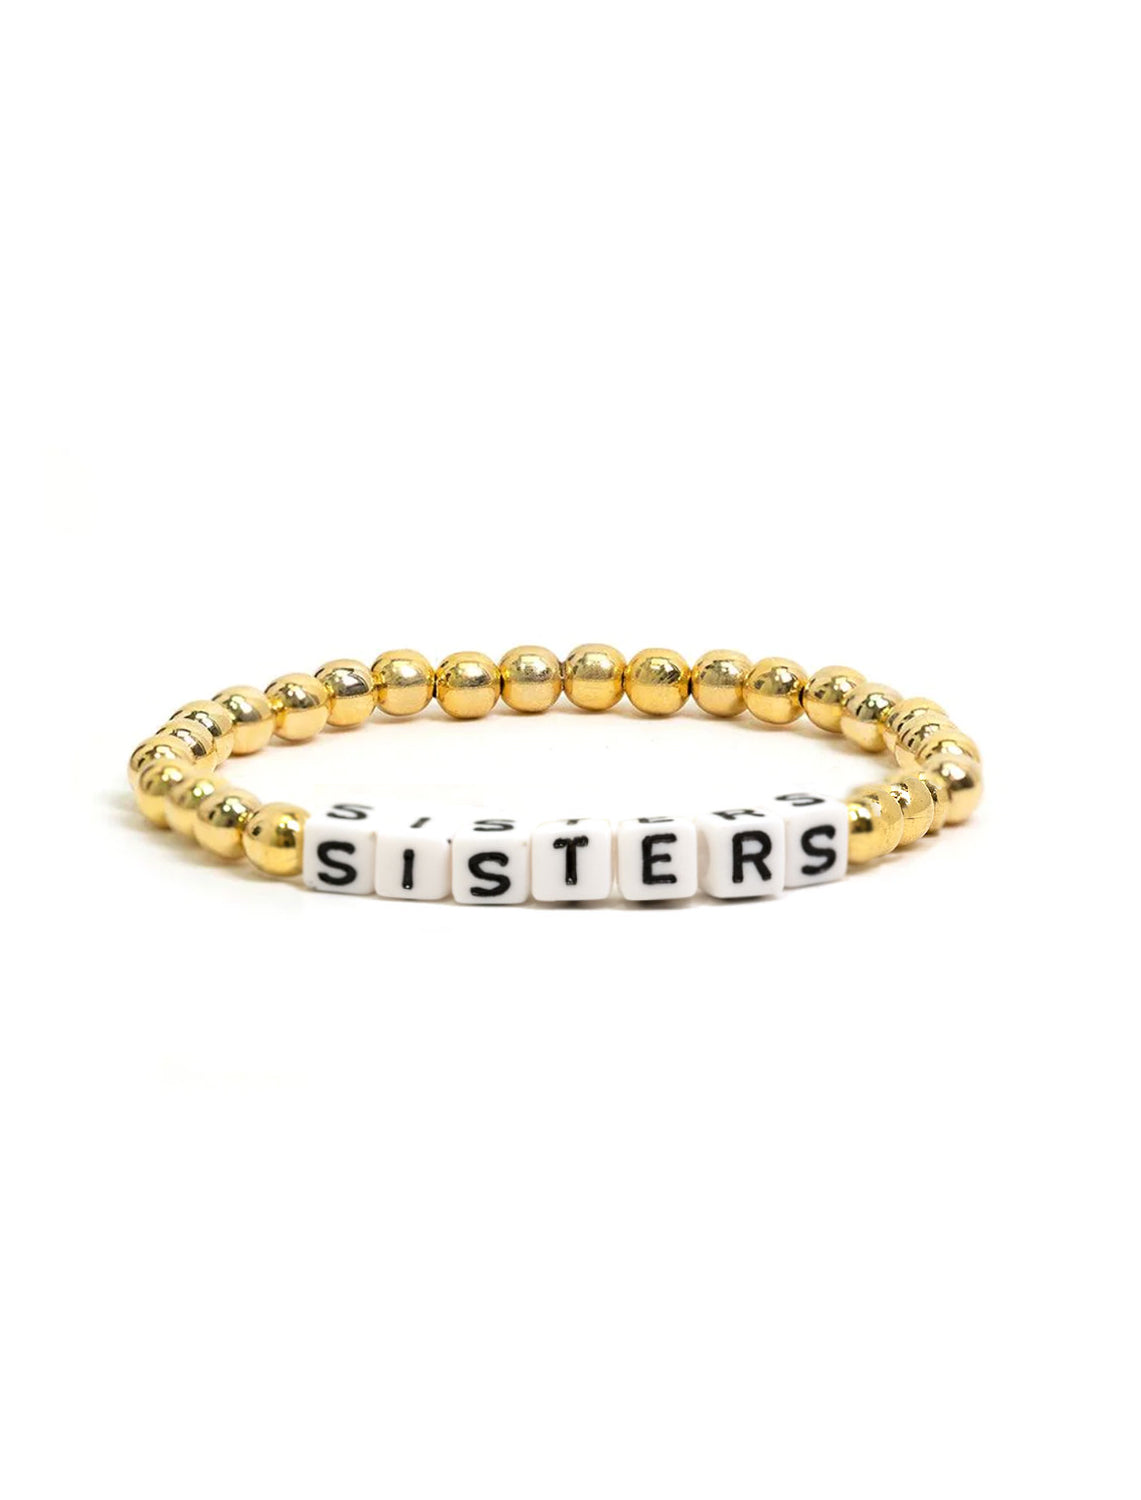 Buy linnalove Sister Bracelet Beautiful Girl, You can do Hard Things  Fashion Rose Gold Heart Friendship Inspirational Bracelets Festival Gift  for Girls(RG) at Amazon.in